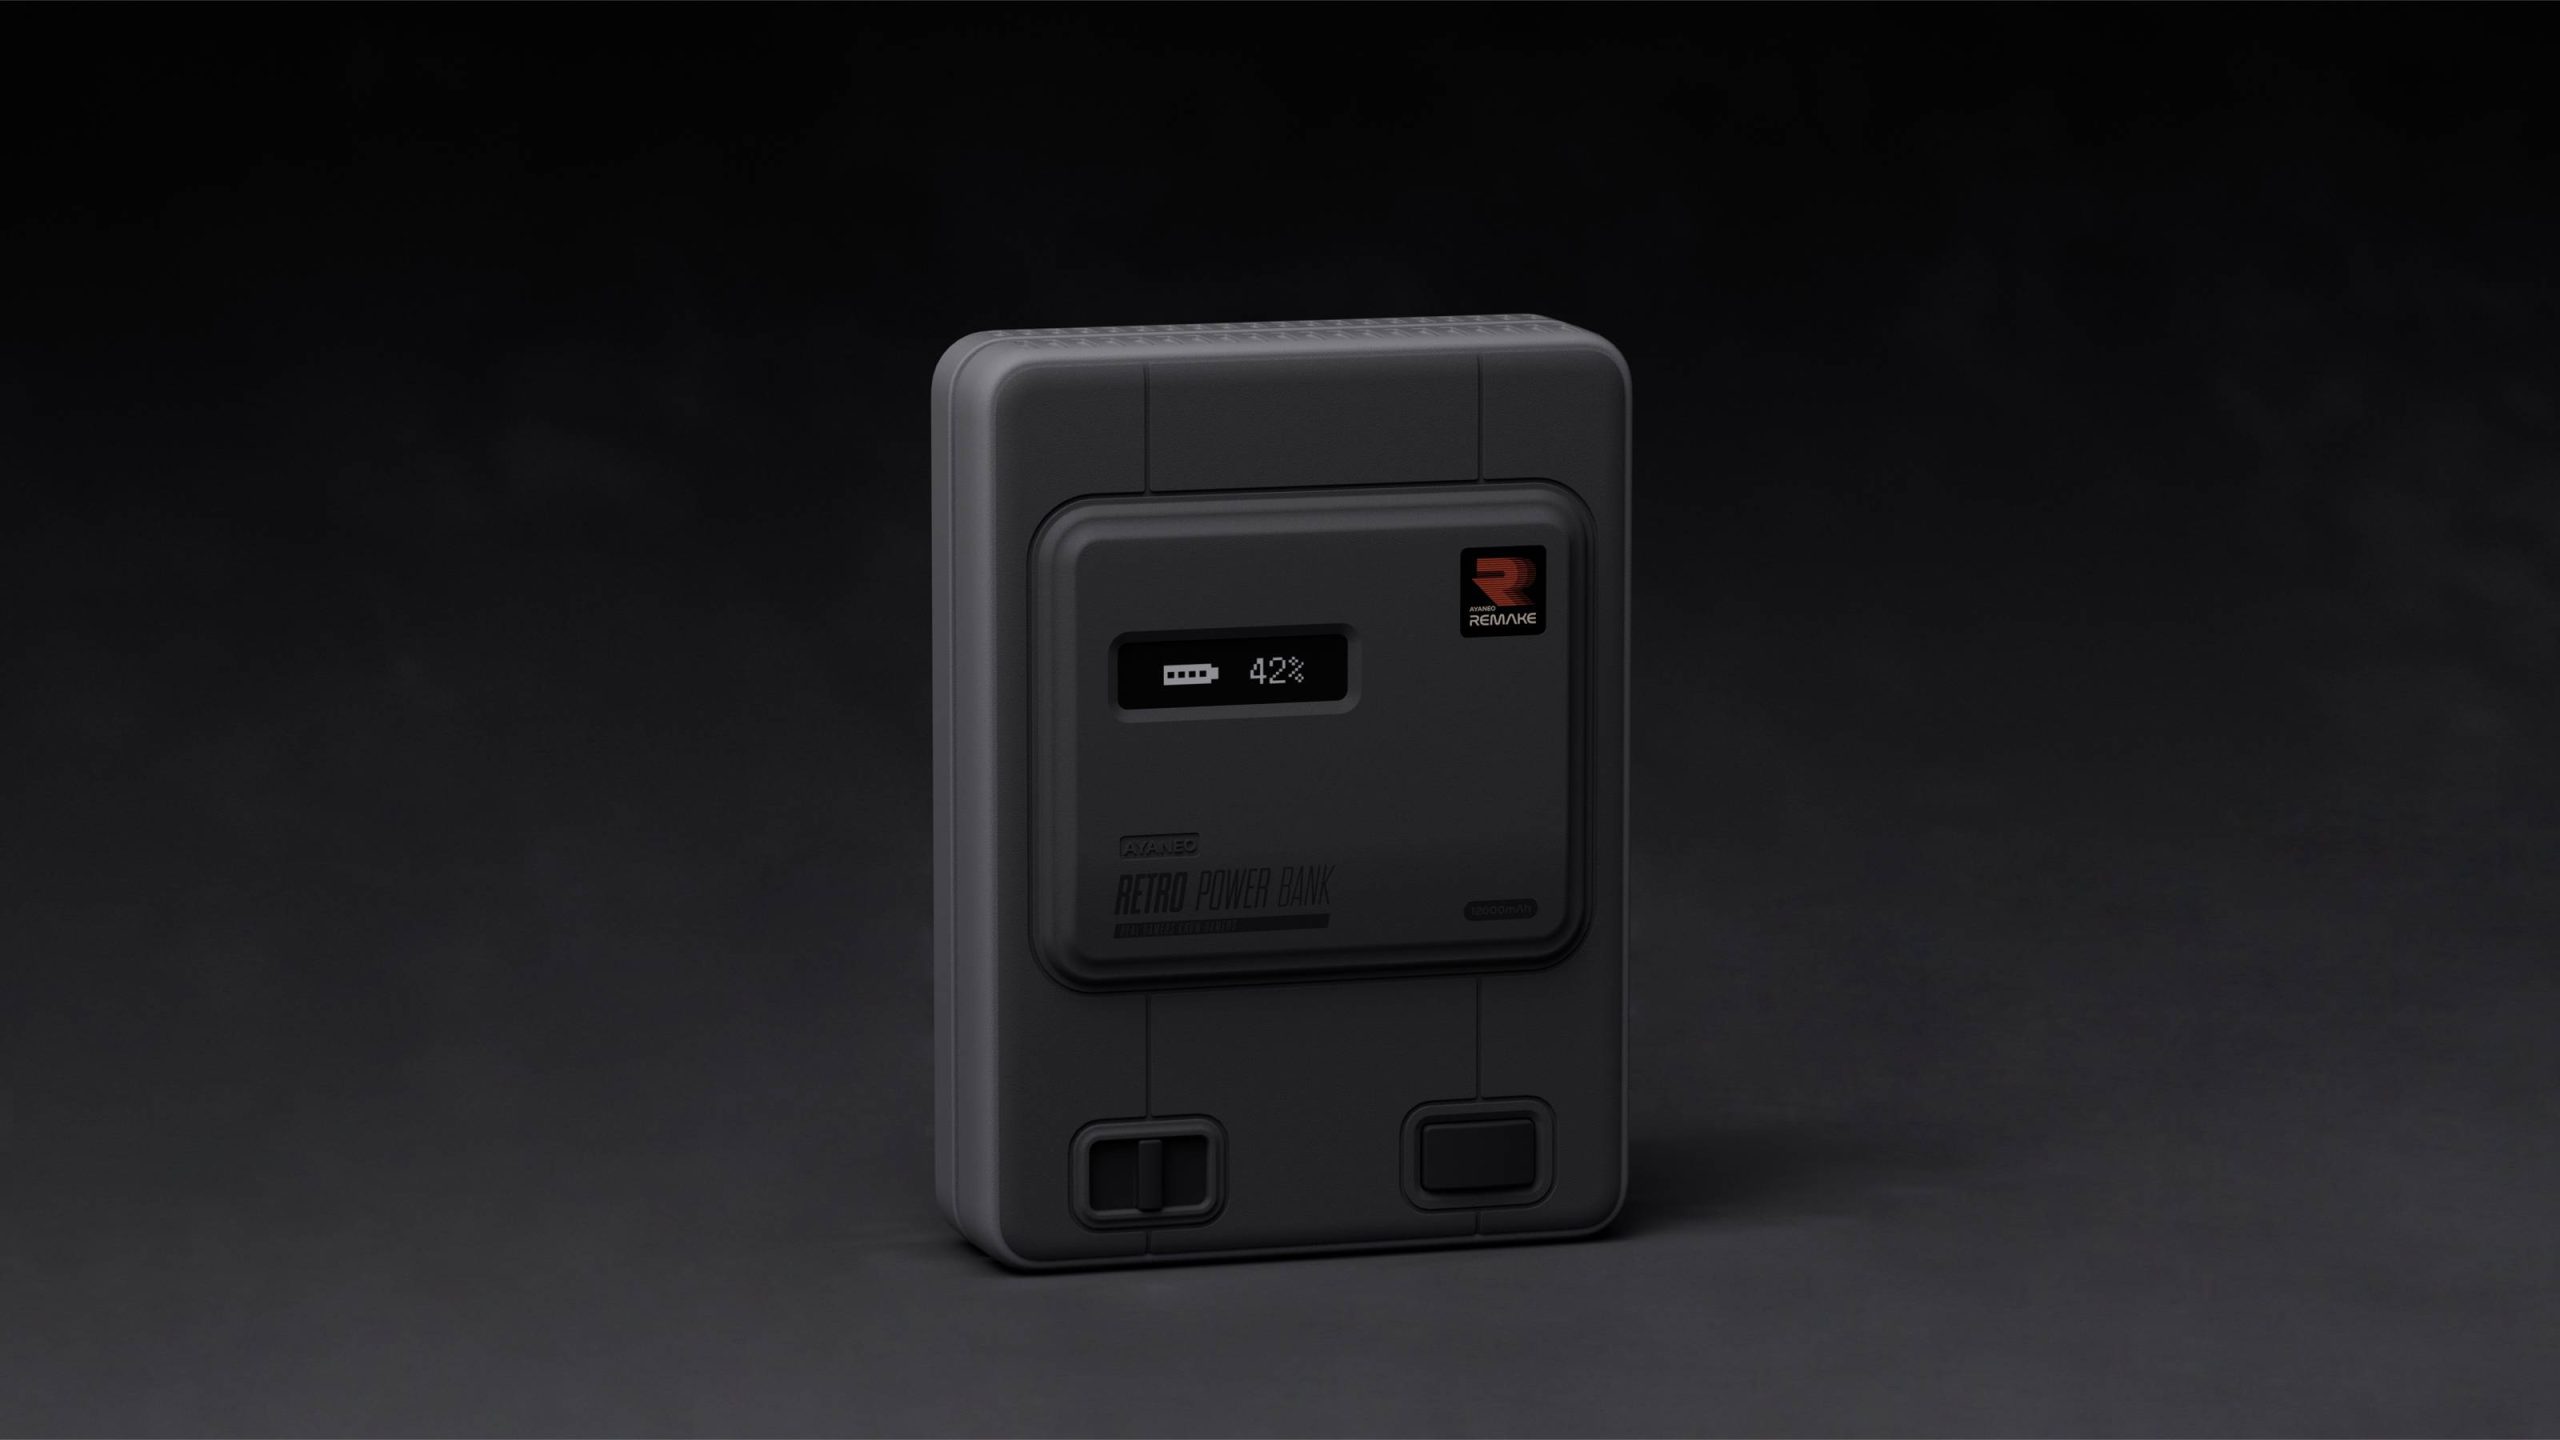 AYANEO Retro Power Bank with Super NES console-like design unveiled -  Gizmochina